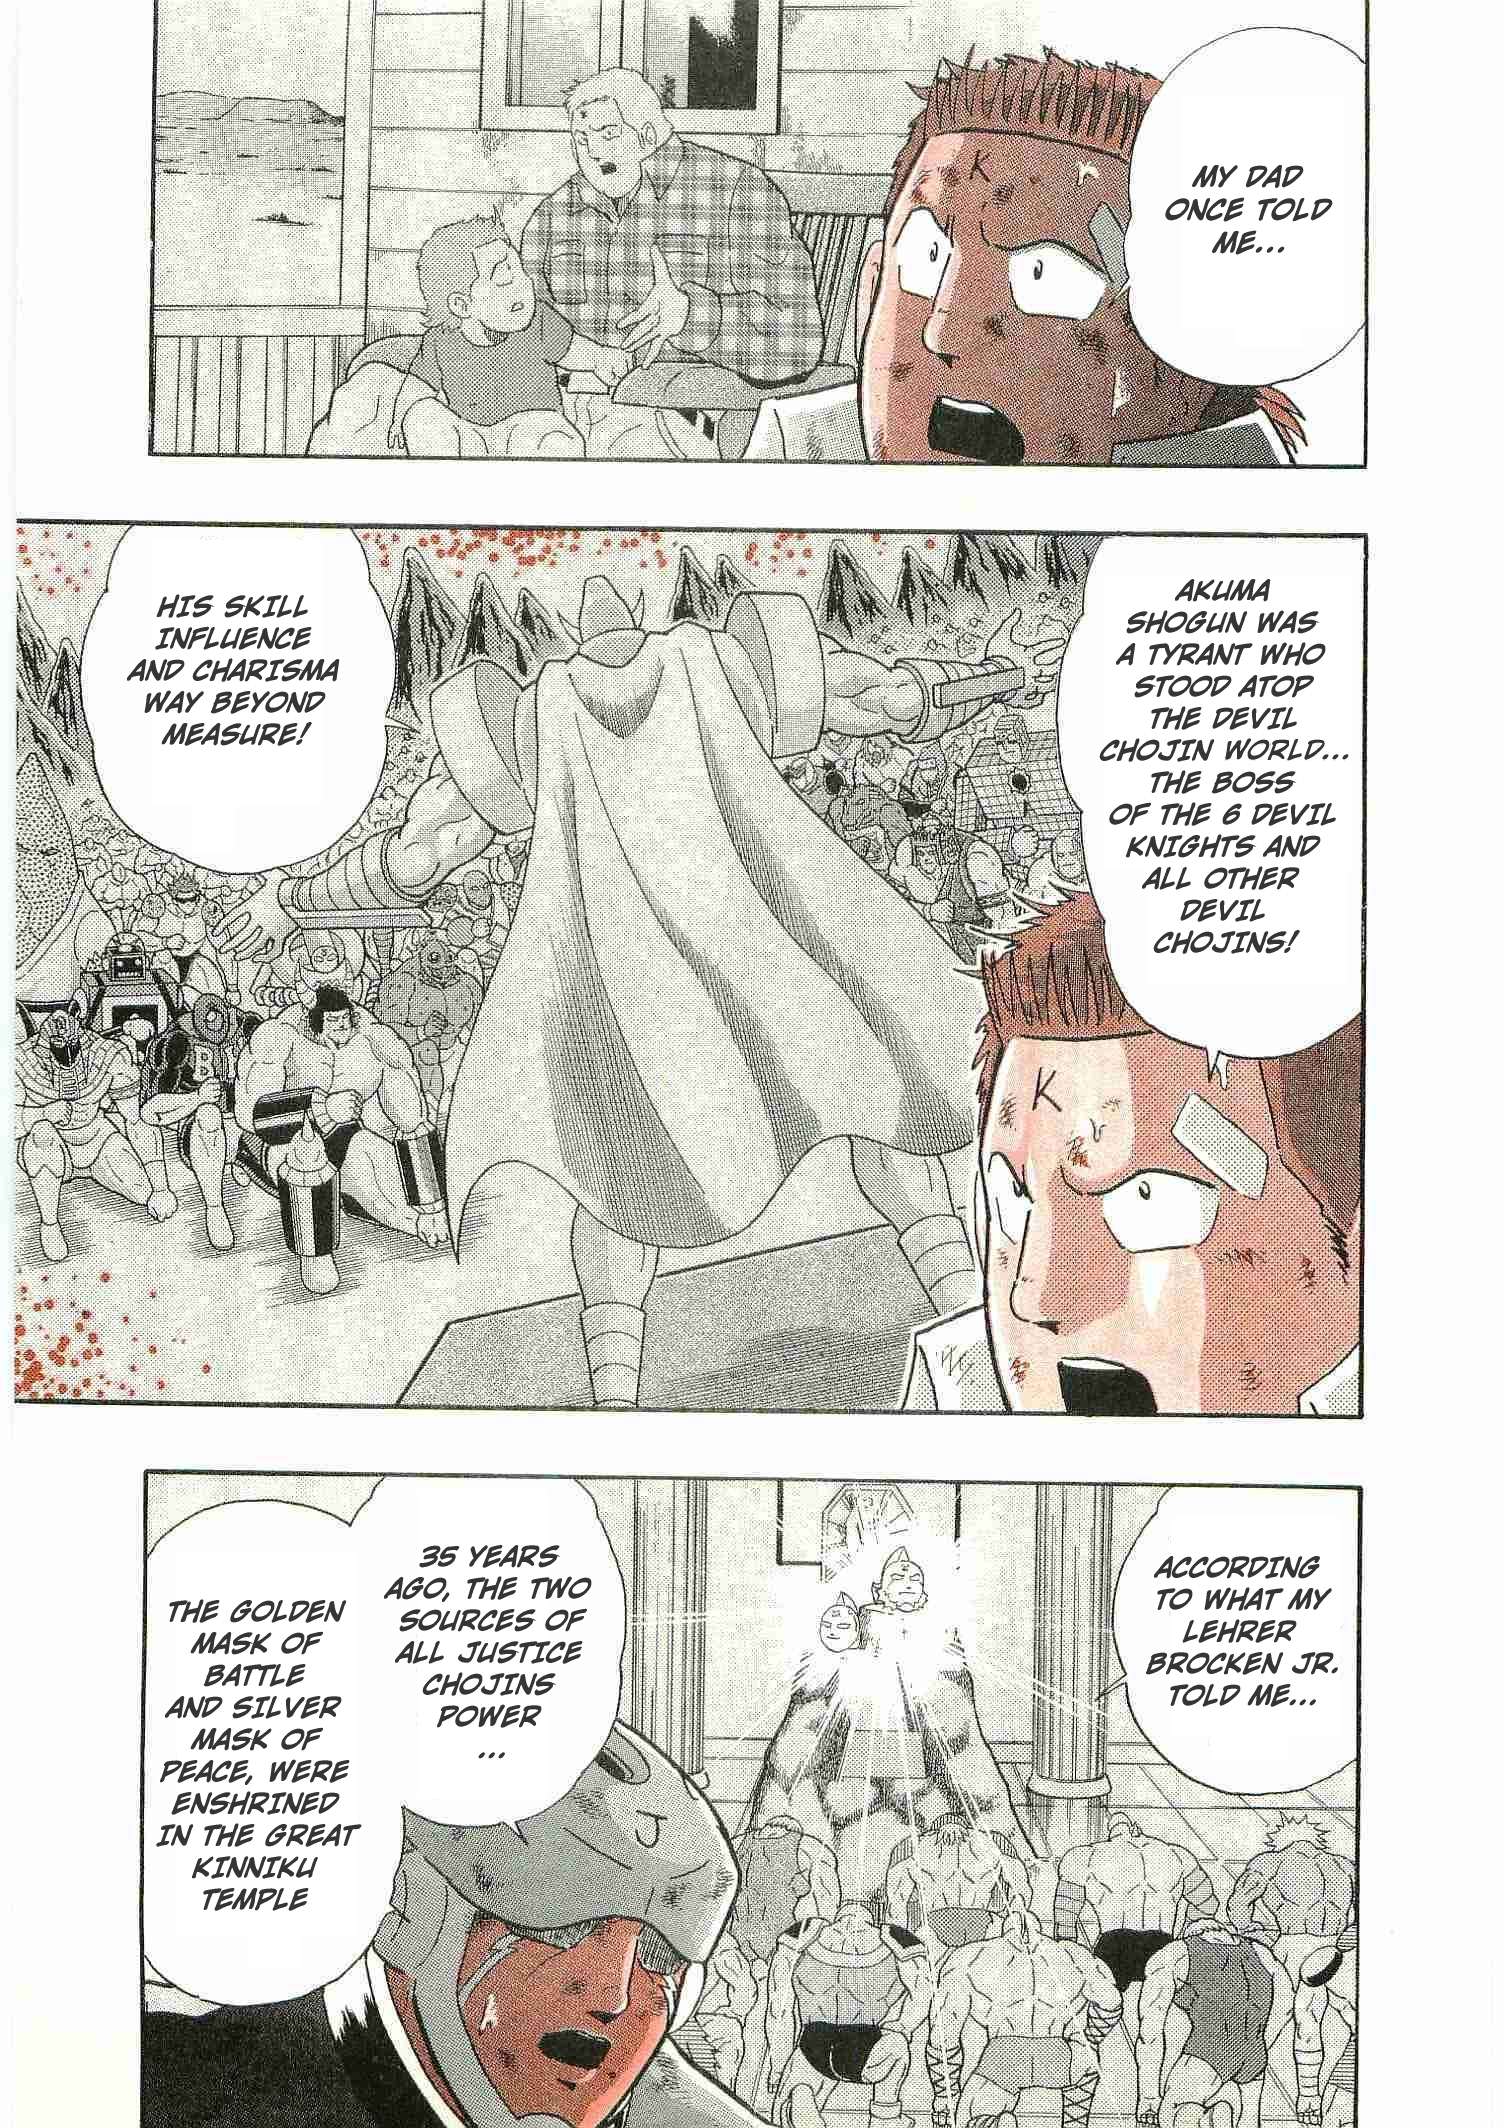 Kinnikuman II Sei - 2nd Generation - chapter 292 - #5